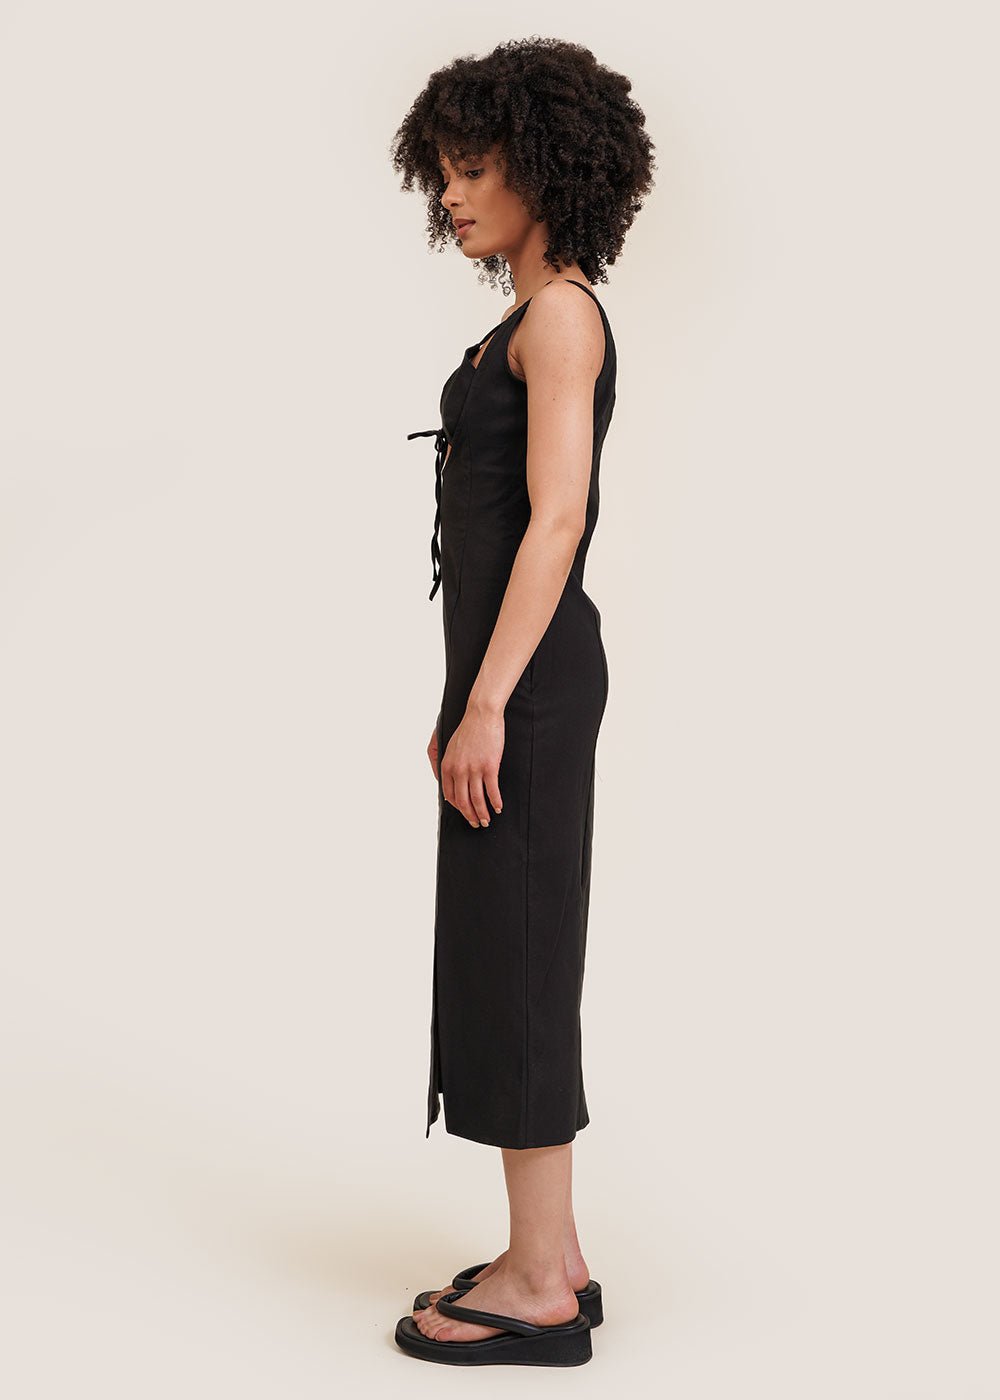 Paloma Wool Black Endy Dress - New Classics Studios Sustainable Ethical Fashion Canada